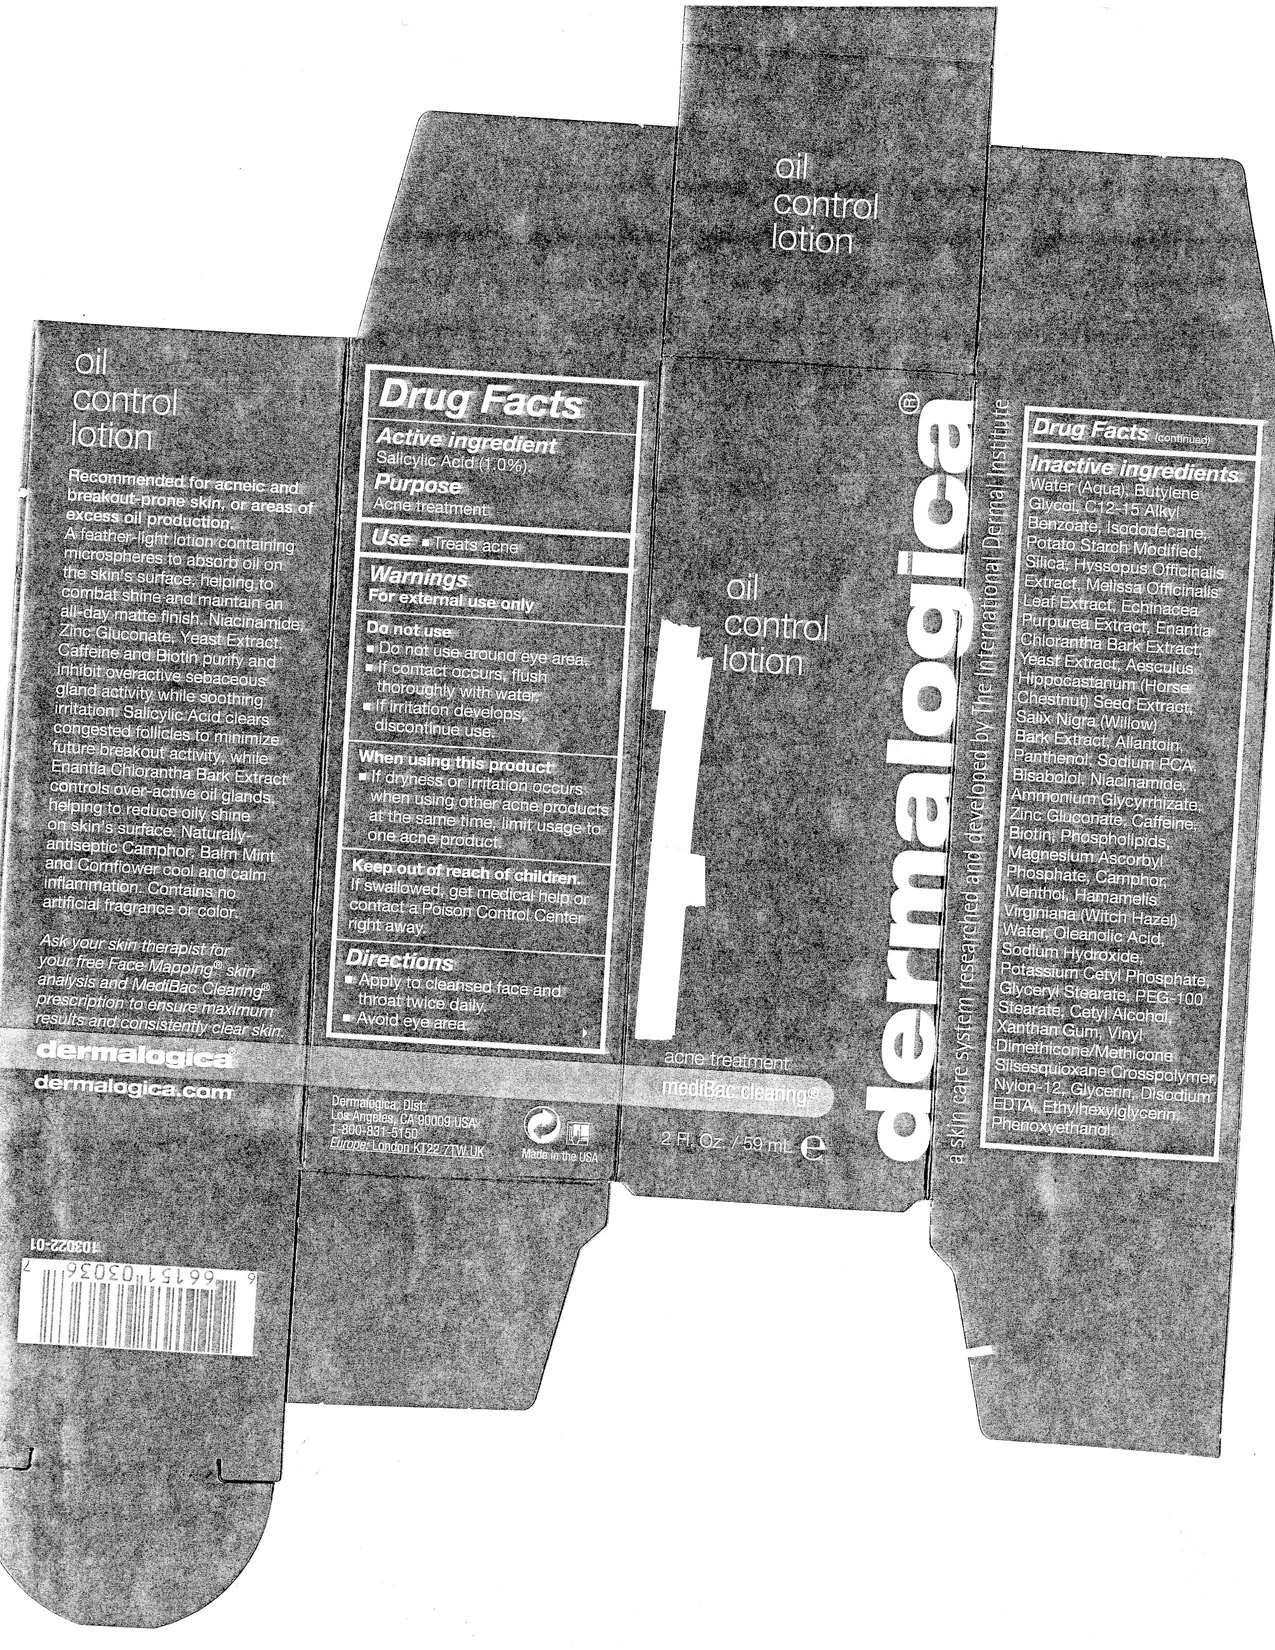 image of carton labeling